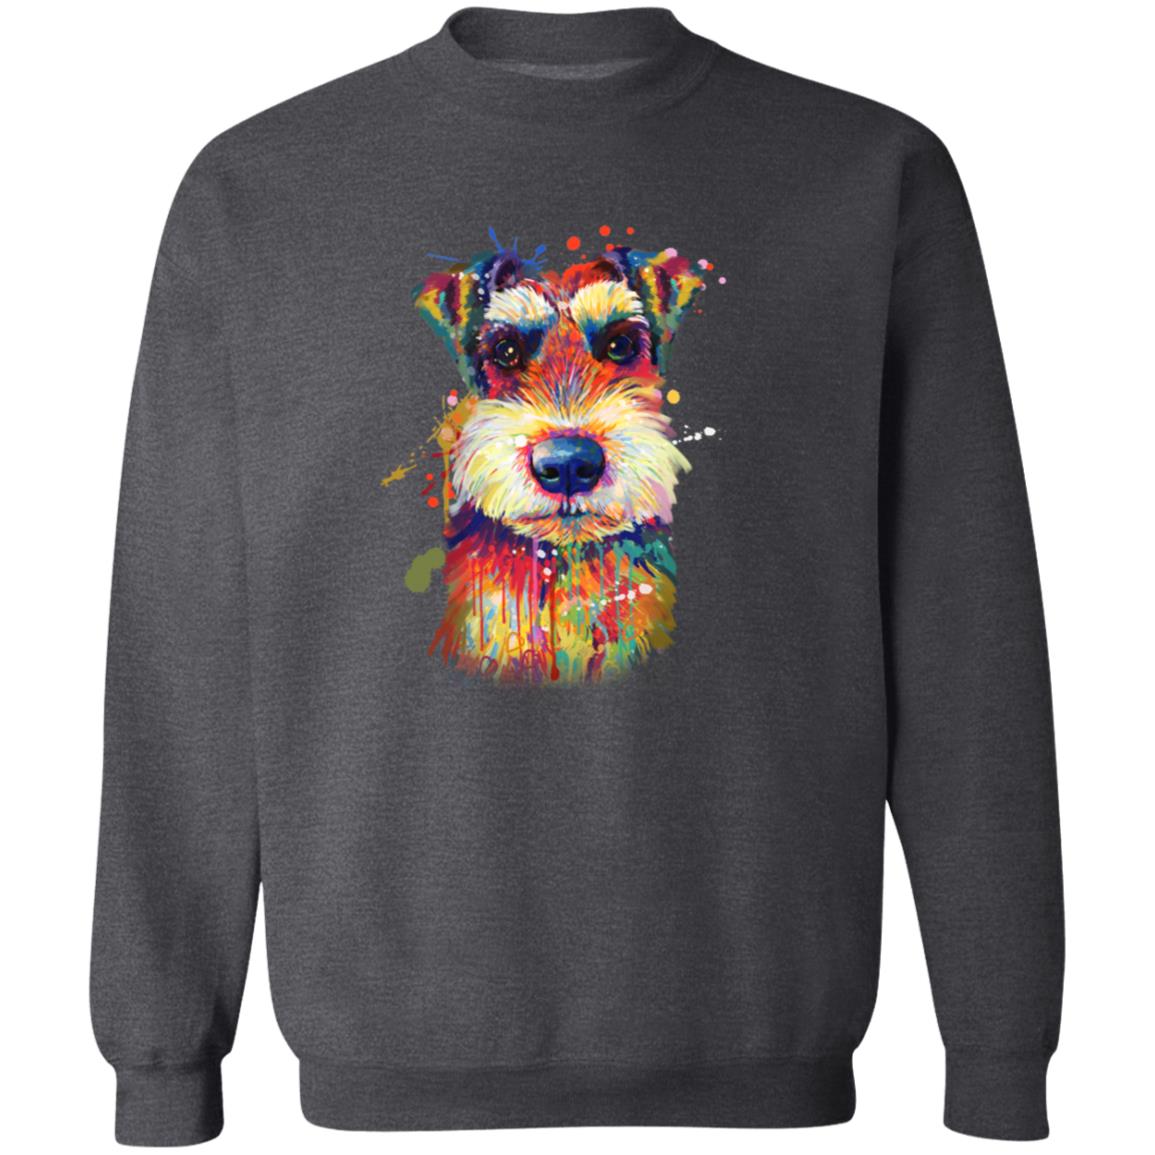 Abstract Schnauzer dog Unisex Crewneck Sweatshirt with expressive splashes-Family-Gift-Planet